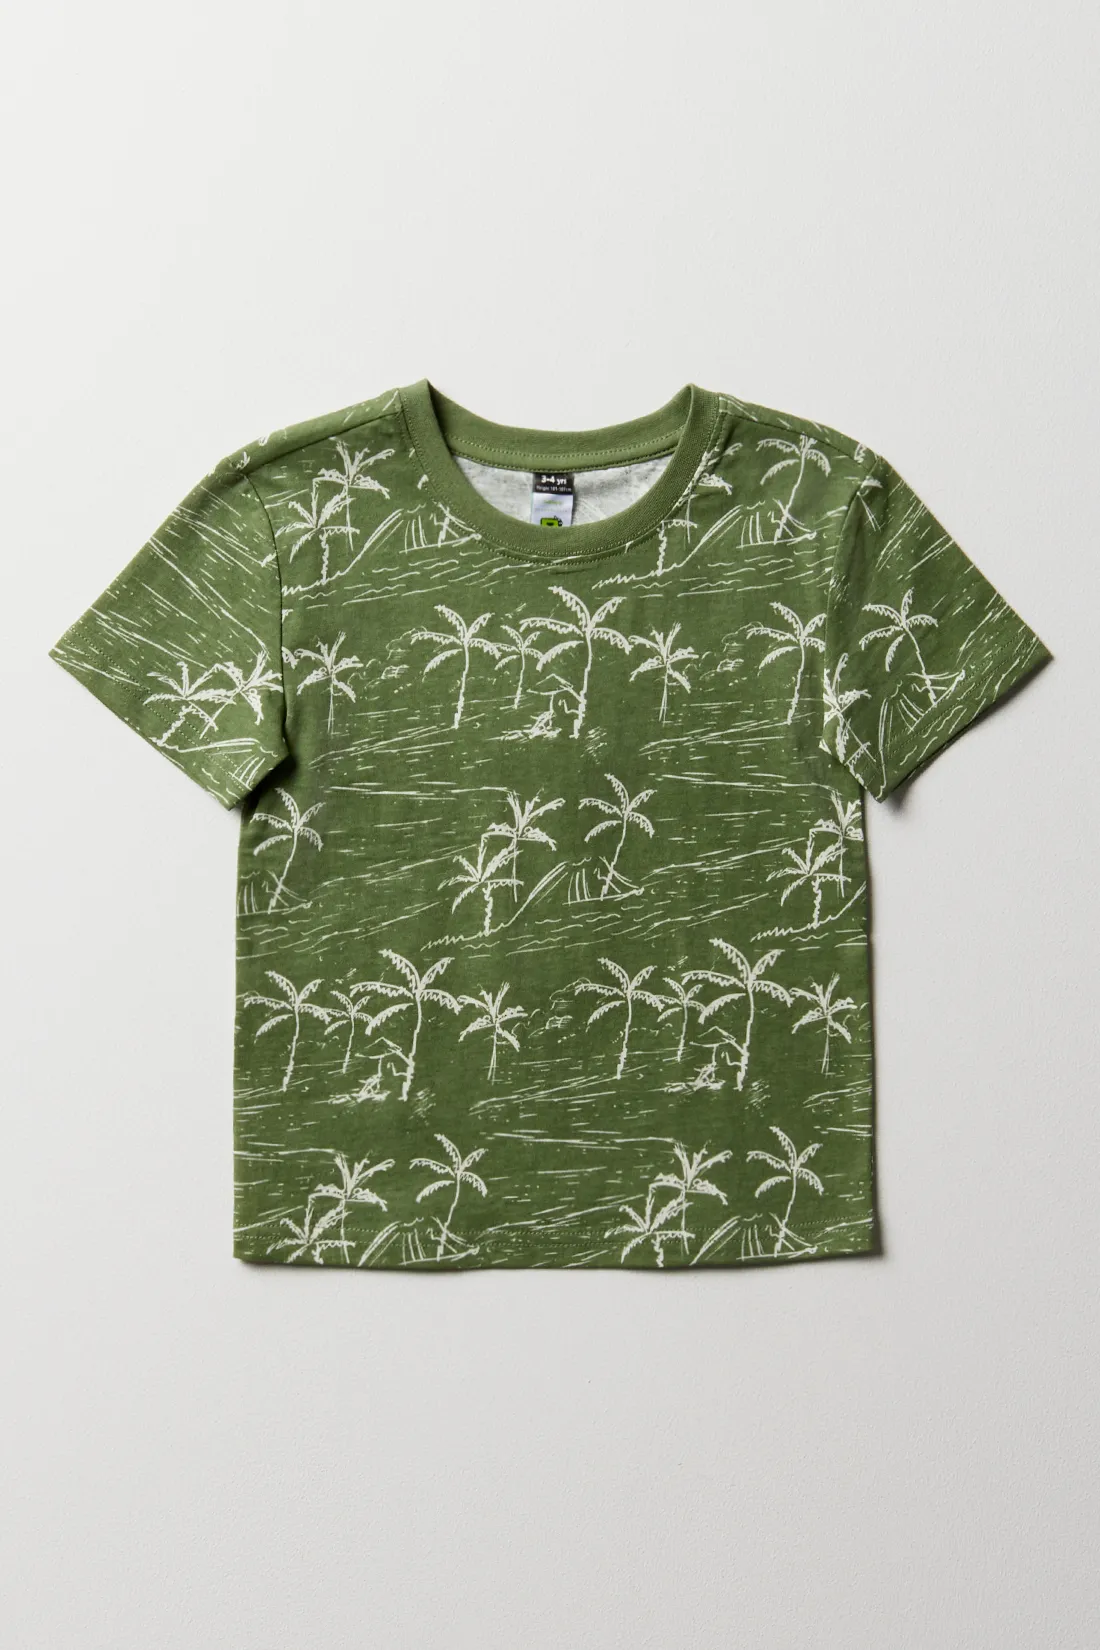 Palm short sleeve t-shirt green - BOYS 2-8 YEARS Tops & T-Shirts ...